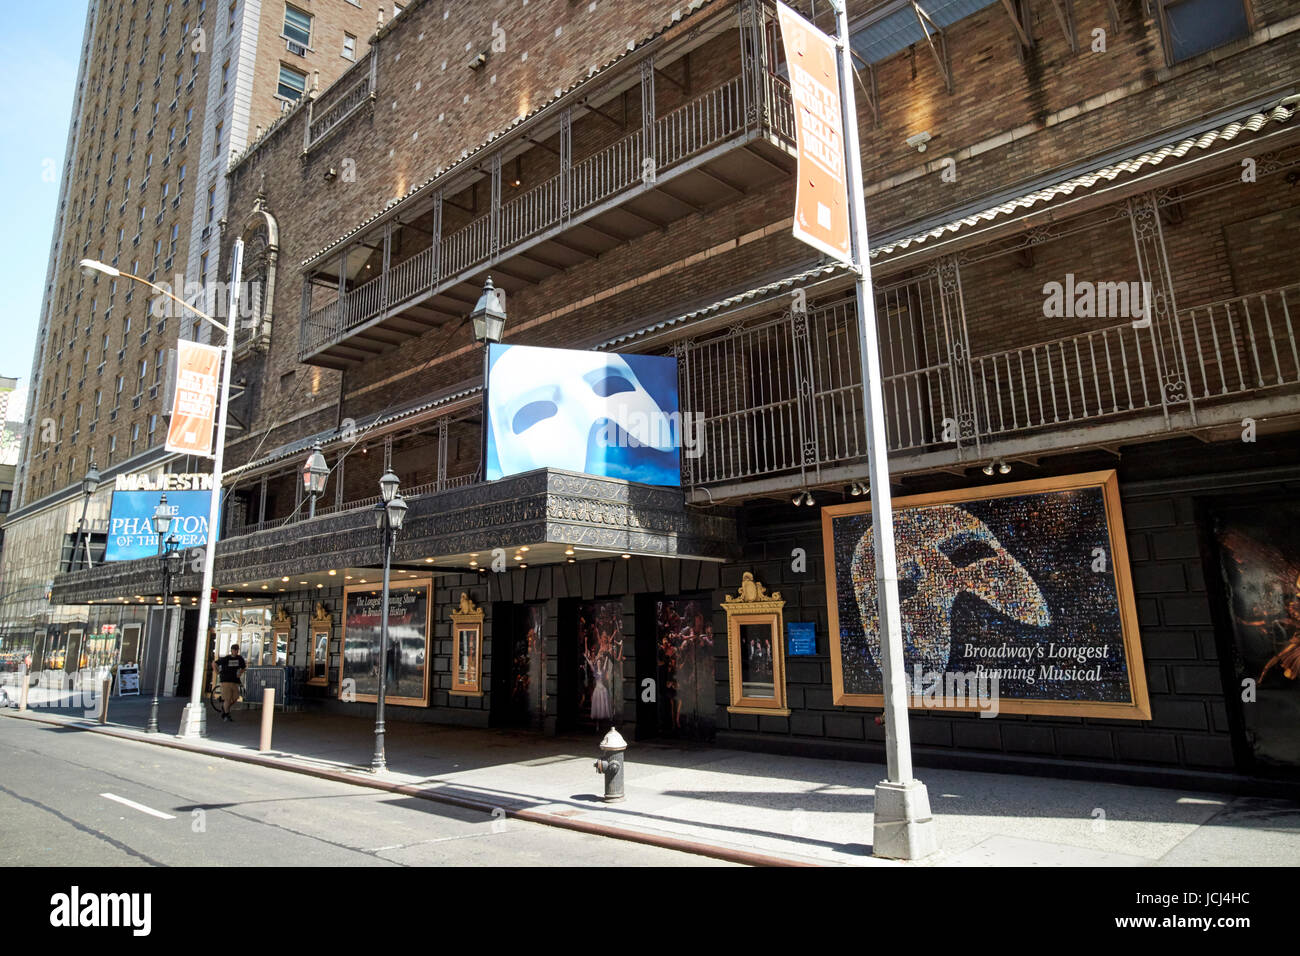 Teatro Majestic con Phantom of the Opera New York City USA Foto Stock